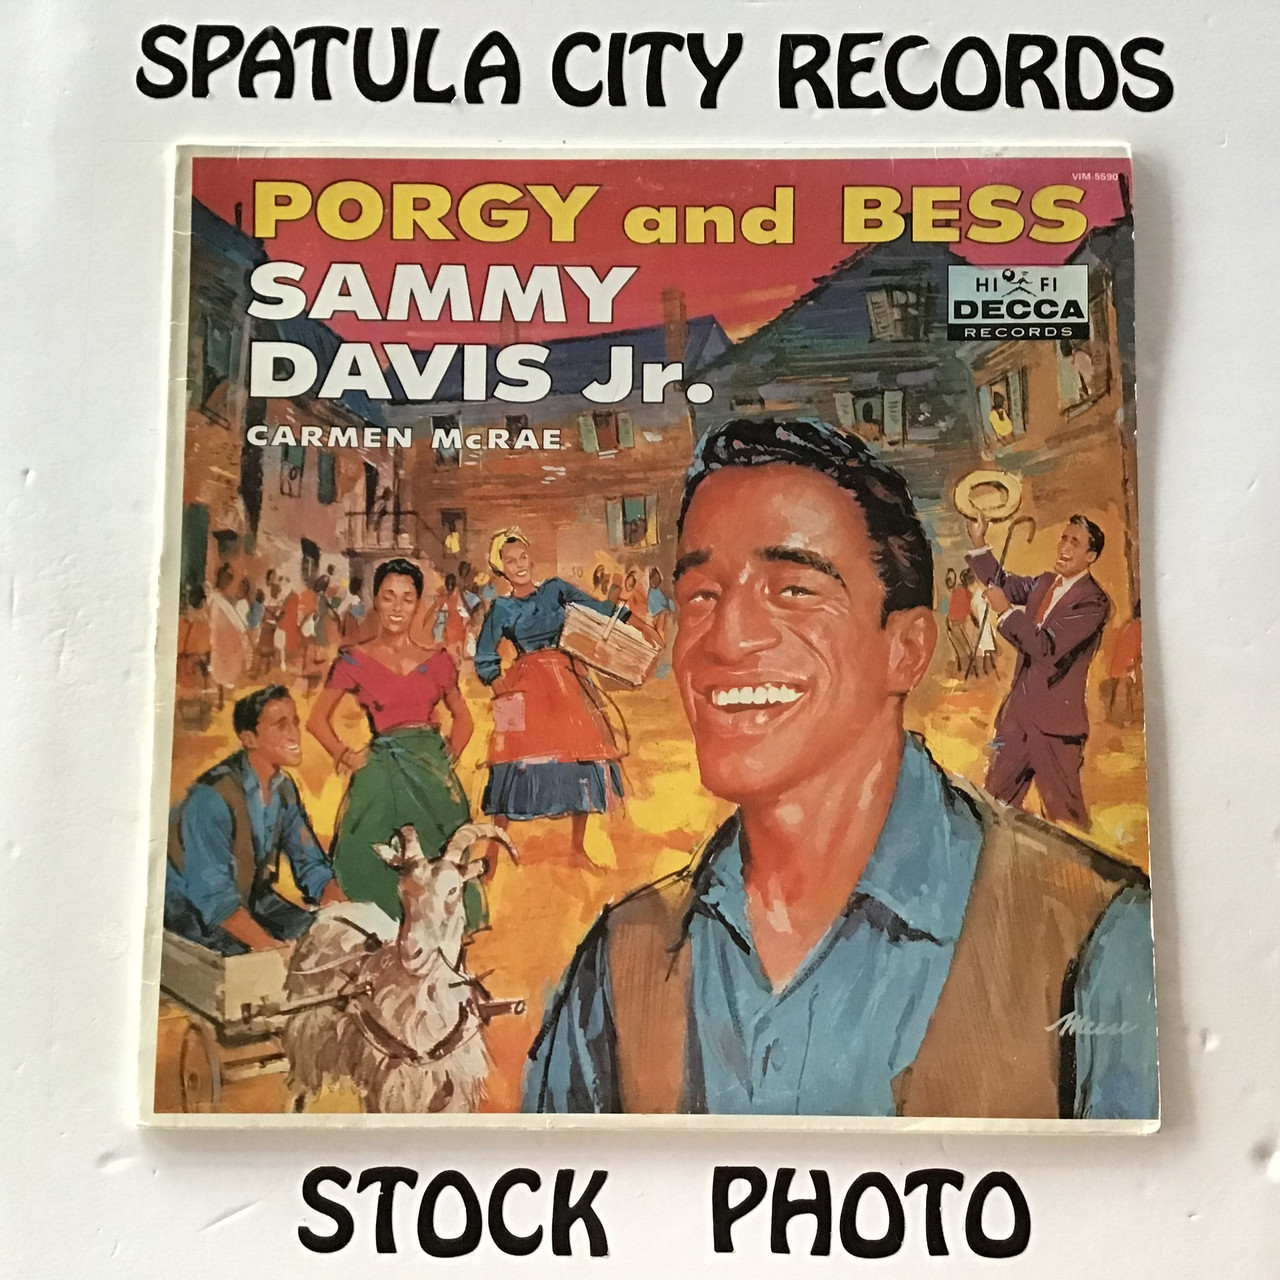 Sammy Davis Jr. - Carmen McRae - Porgy and Bess - IMPORT - vinyl record LP